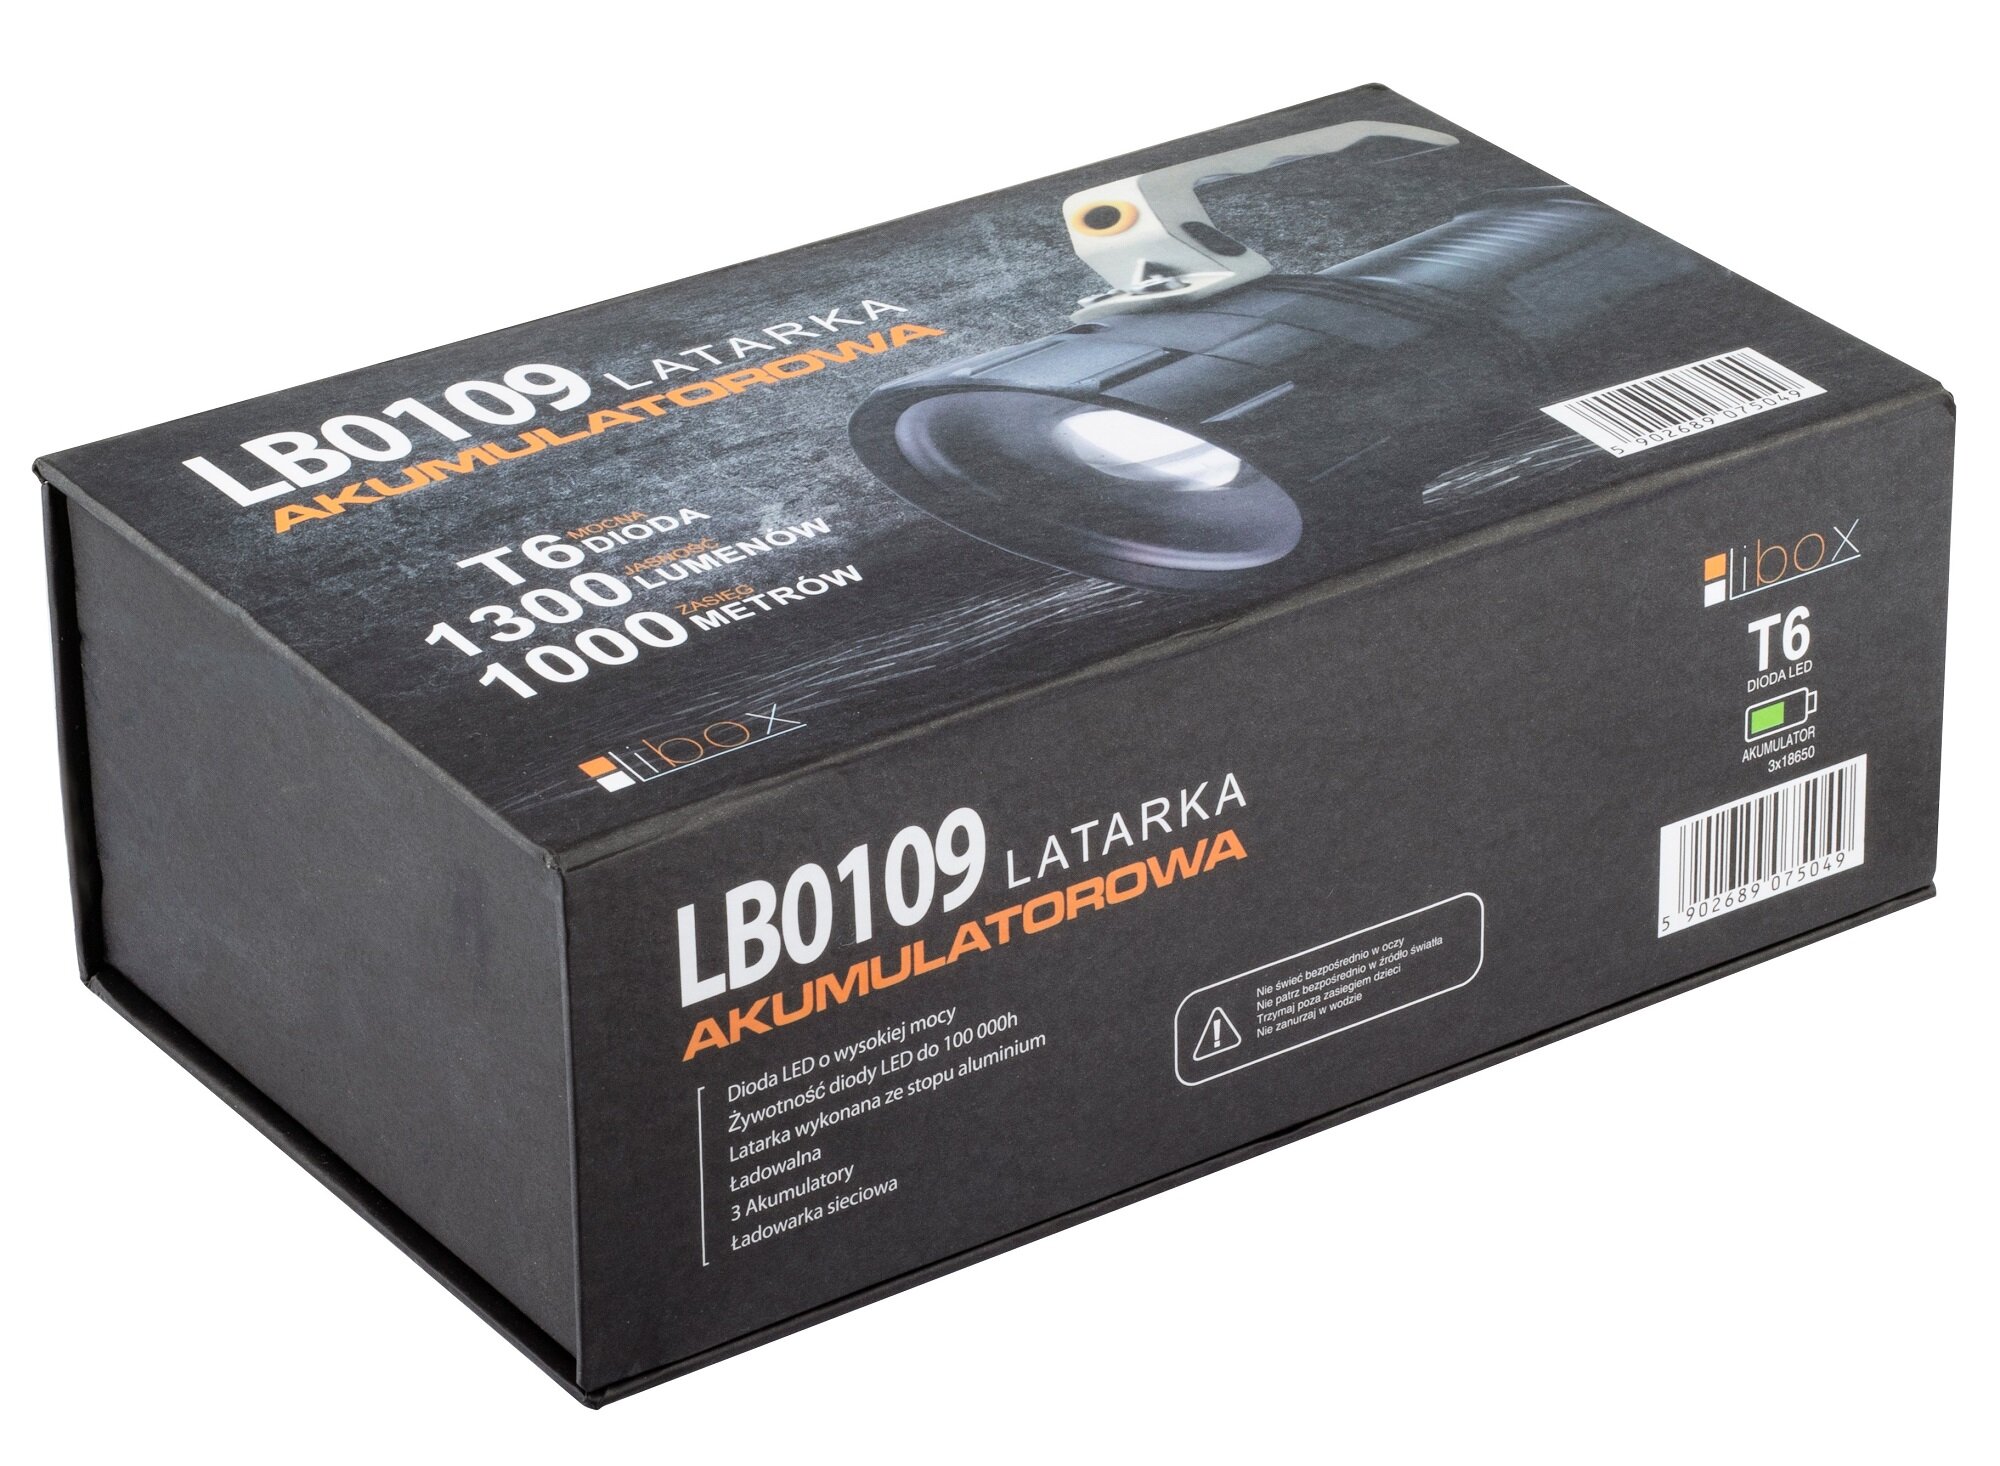 LIBOX T6 LB0109 Latarka - niskie ceny i opinie w Media Expert